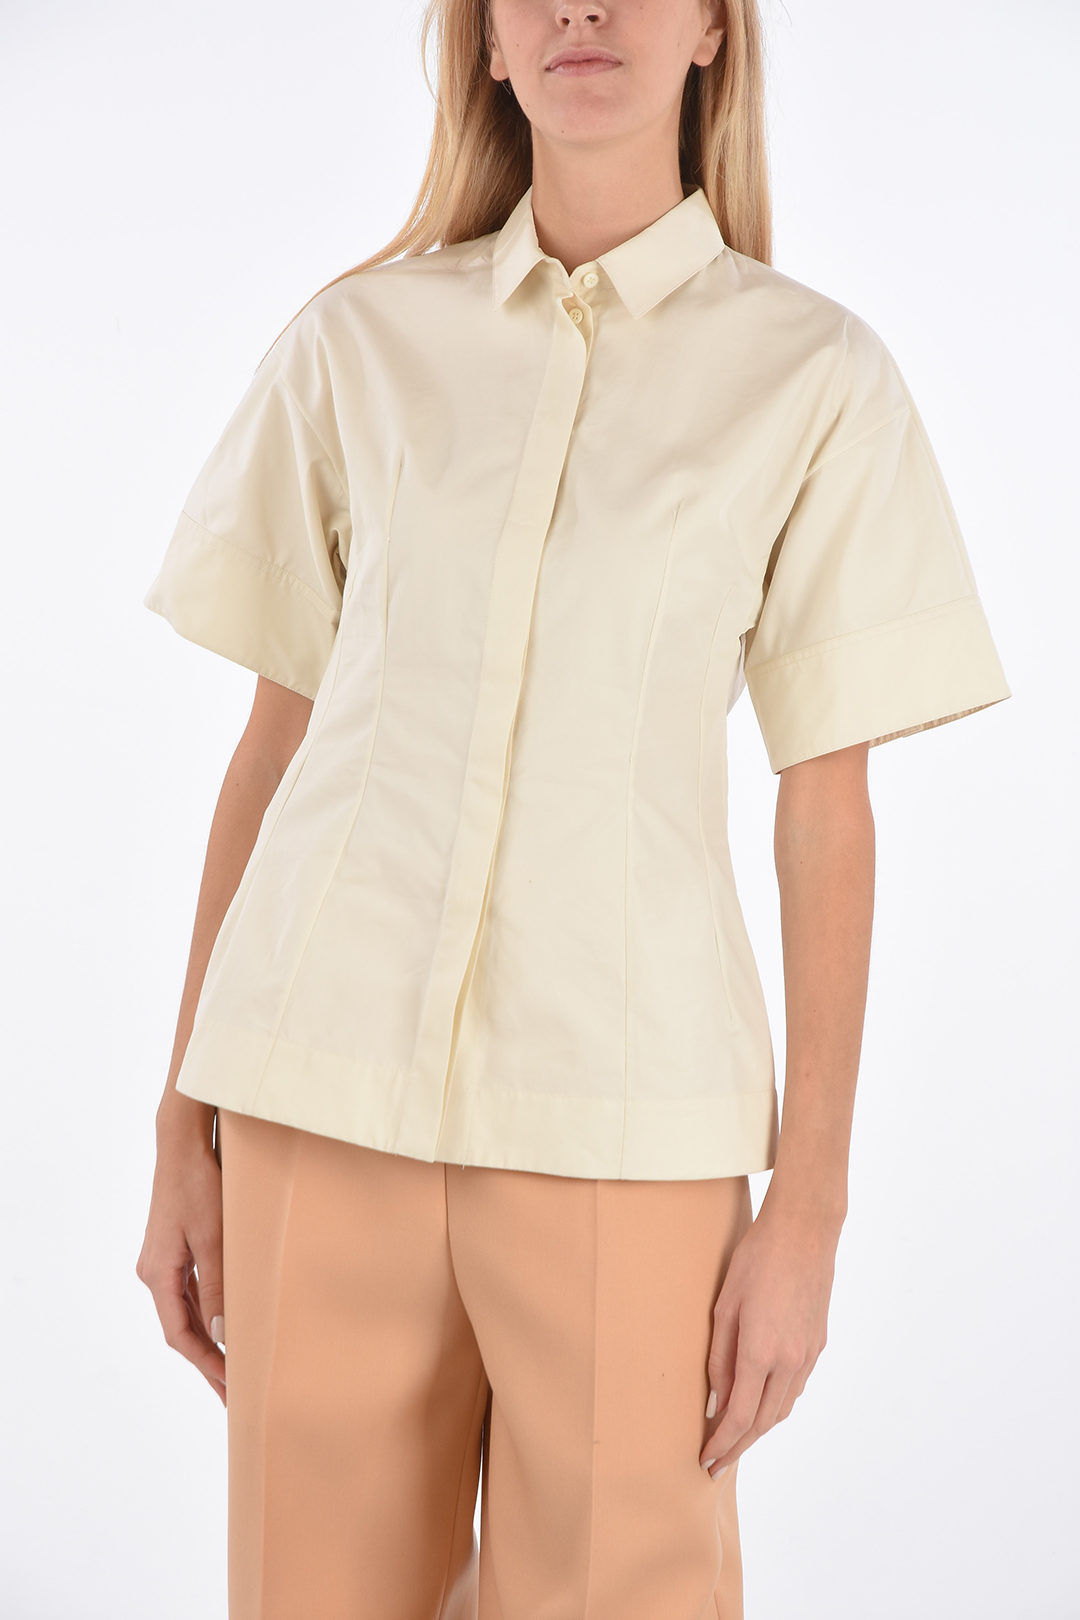 Cotton LUZ Short Sleeve Shirt